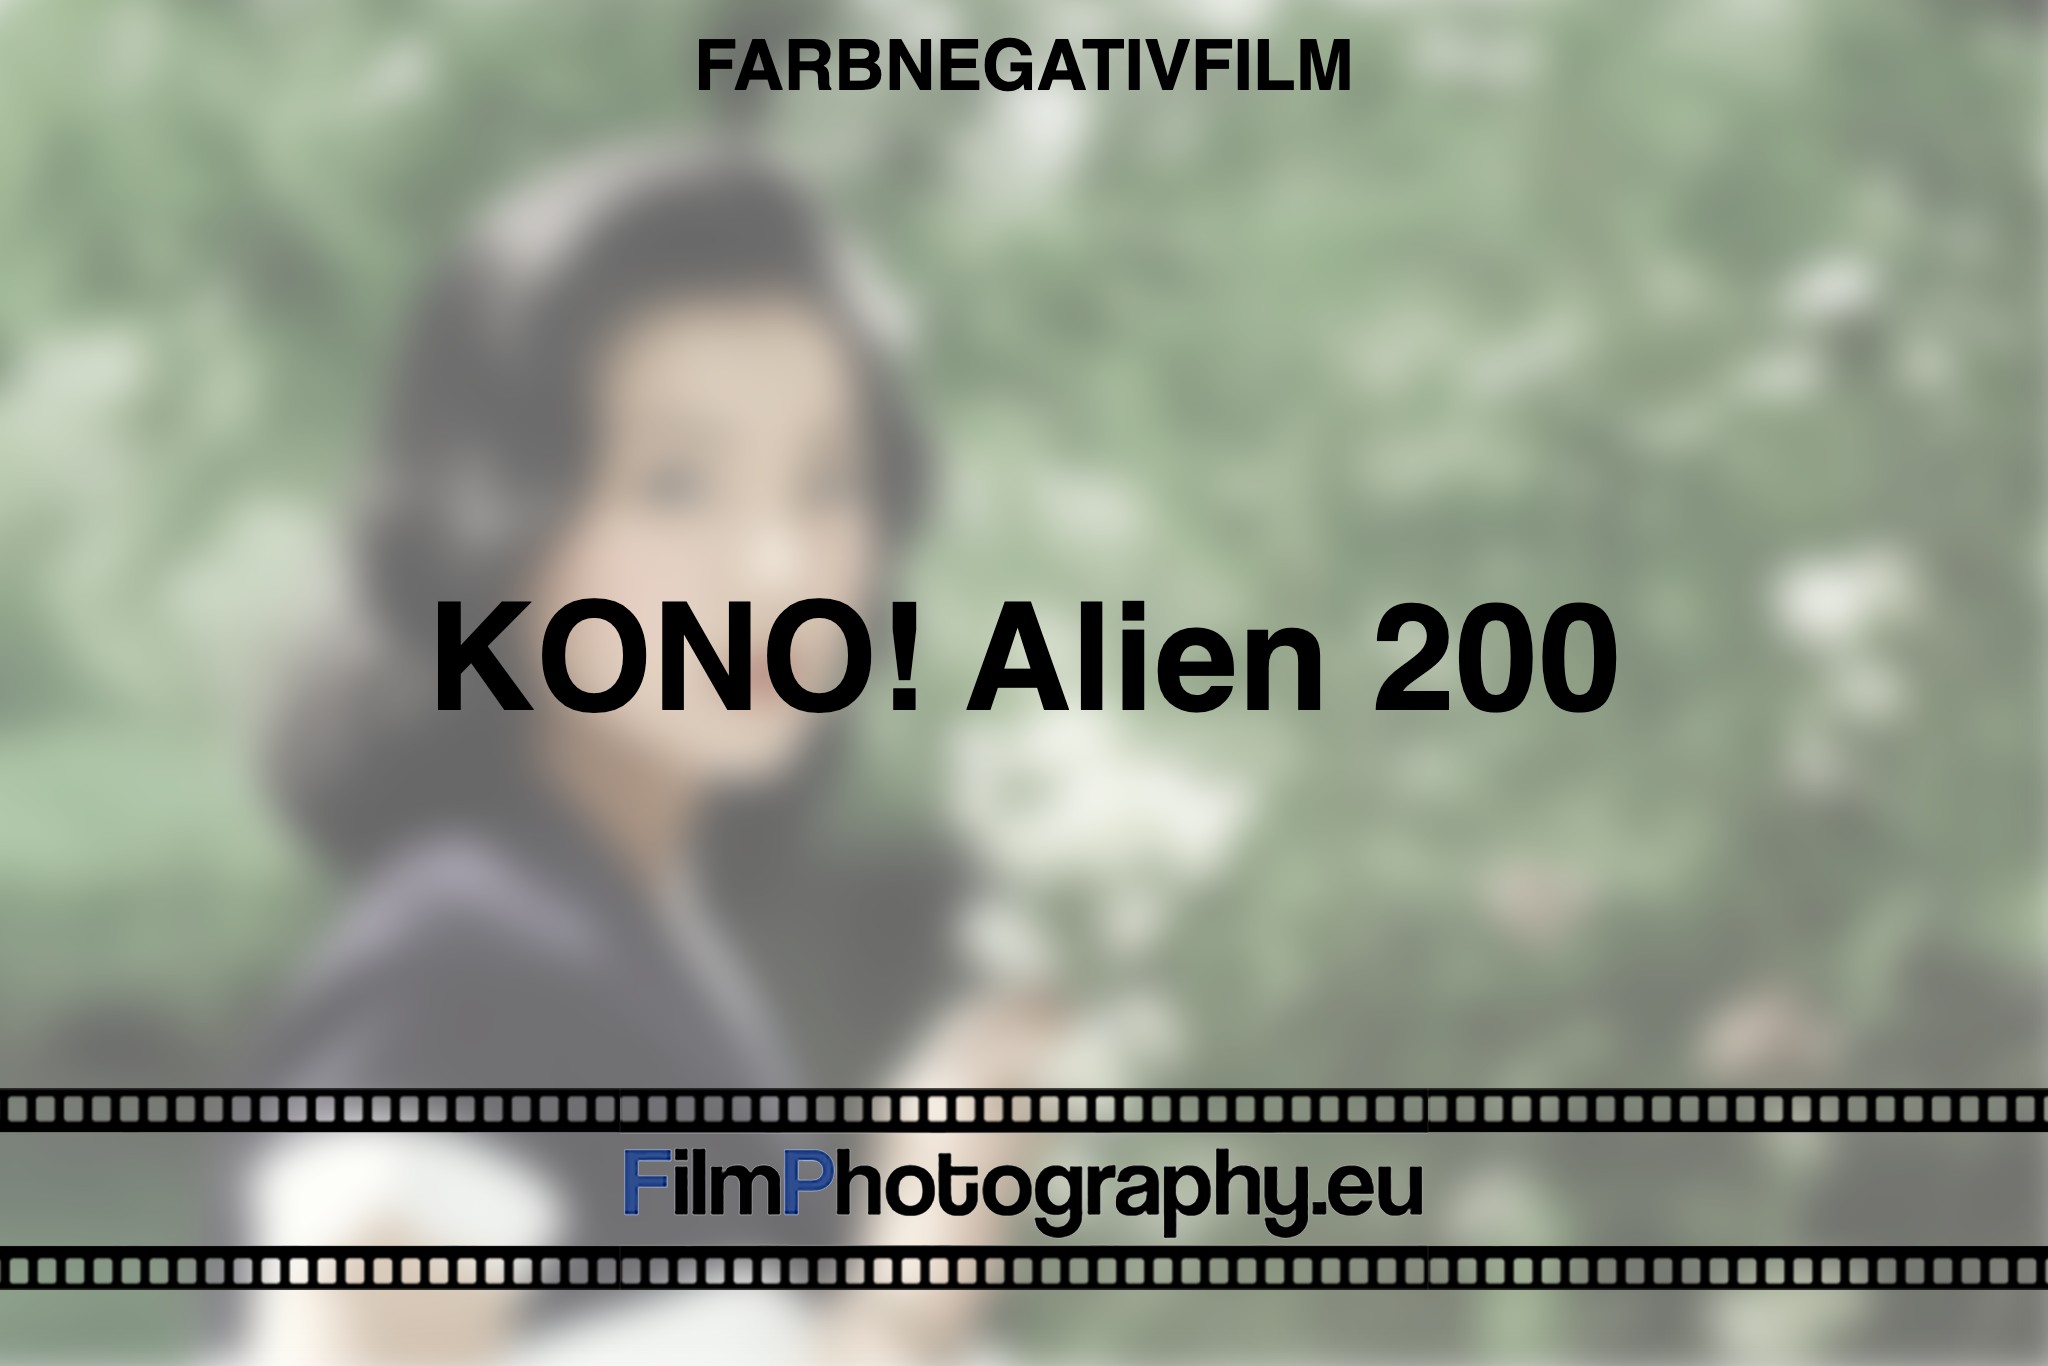 kono-alien-200-farbnegativfilm-bnv